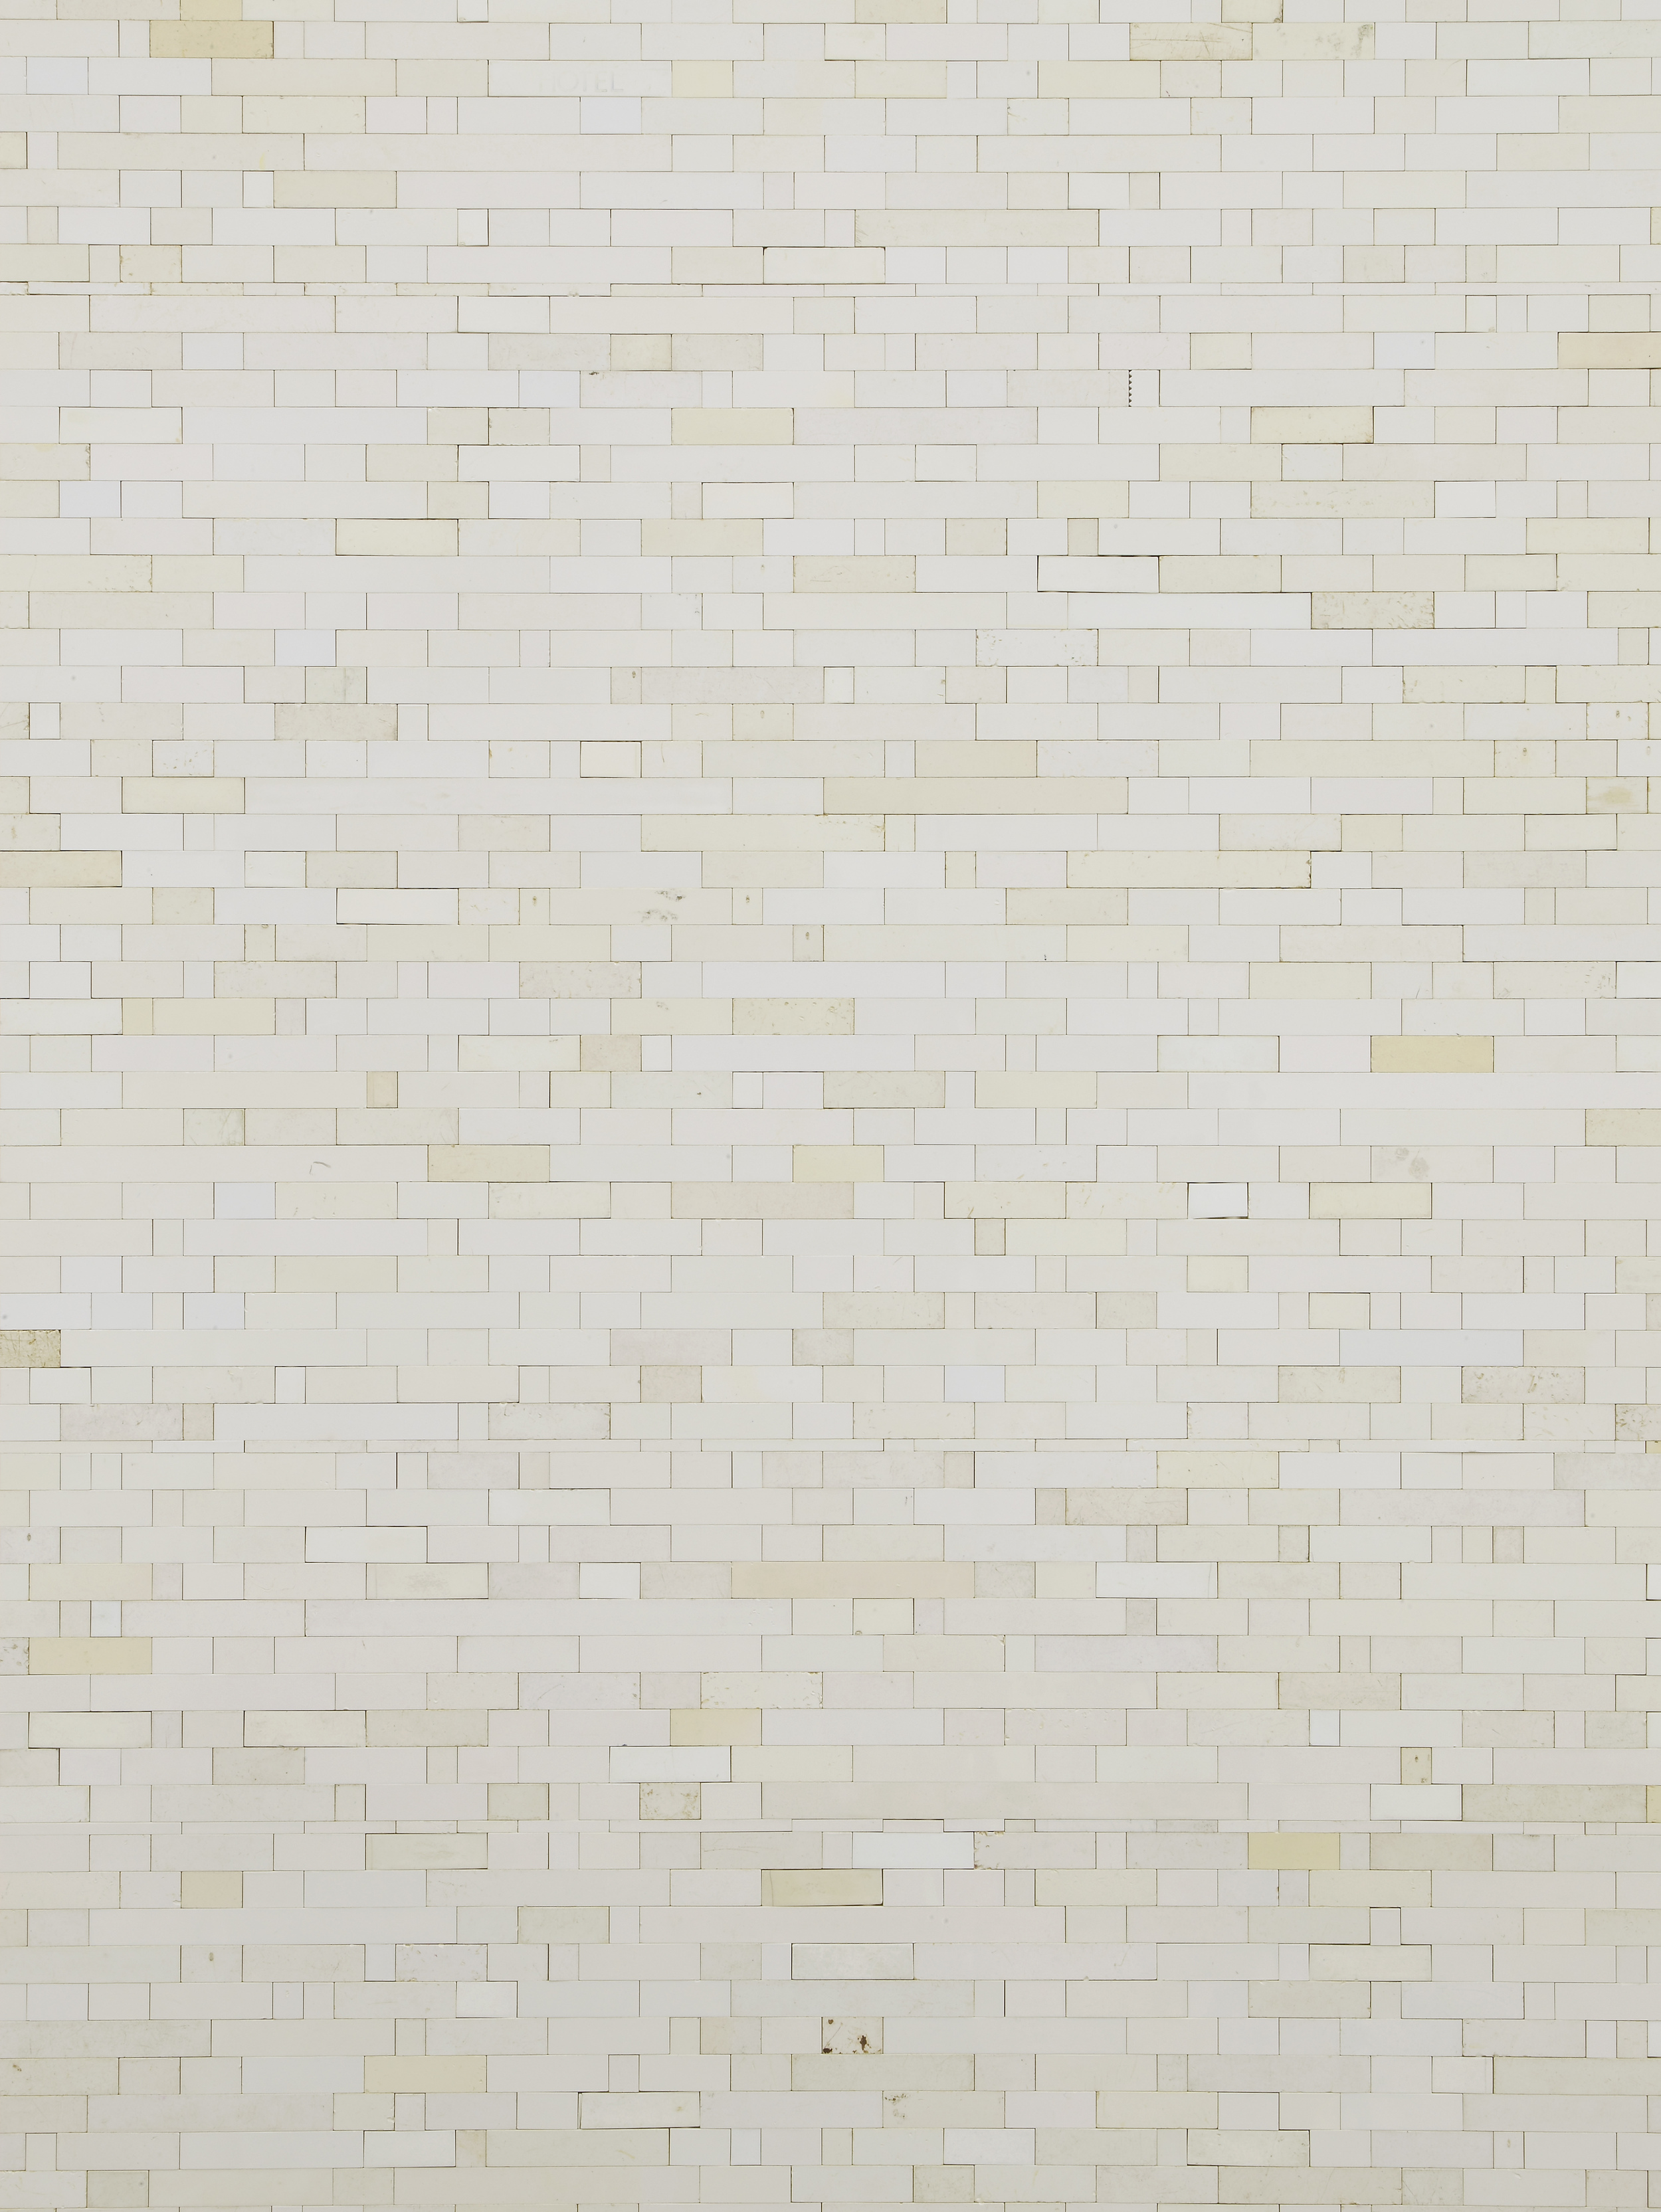     Michael Wilkinson White Wall 5 (Detail) 2013 White Lego column 185 x 33 x 50 cm / 72.8 x 11.8 x 19.6 in 